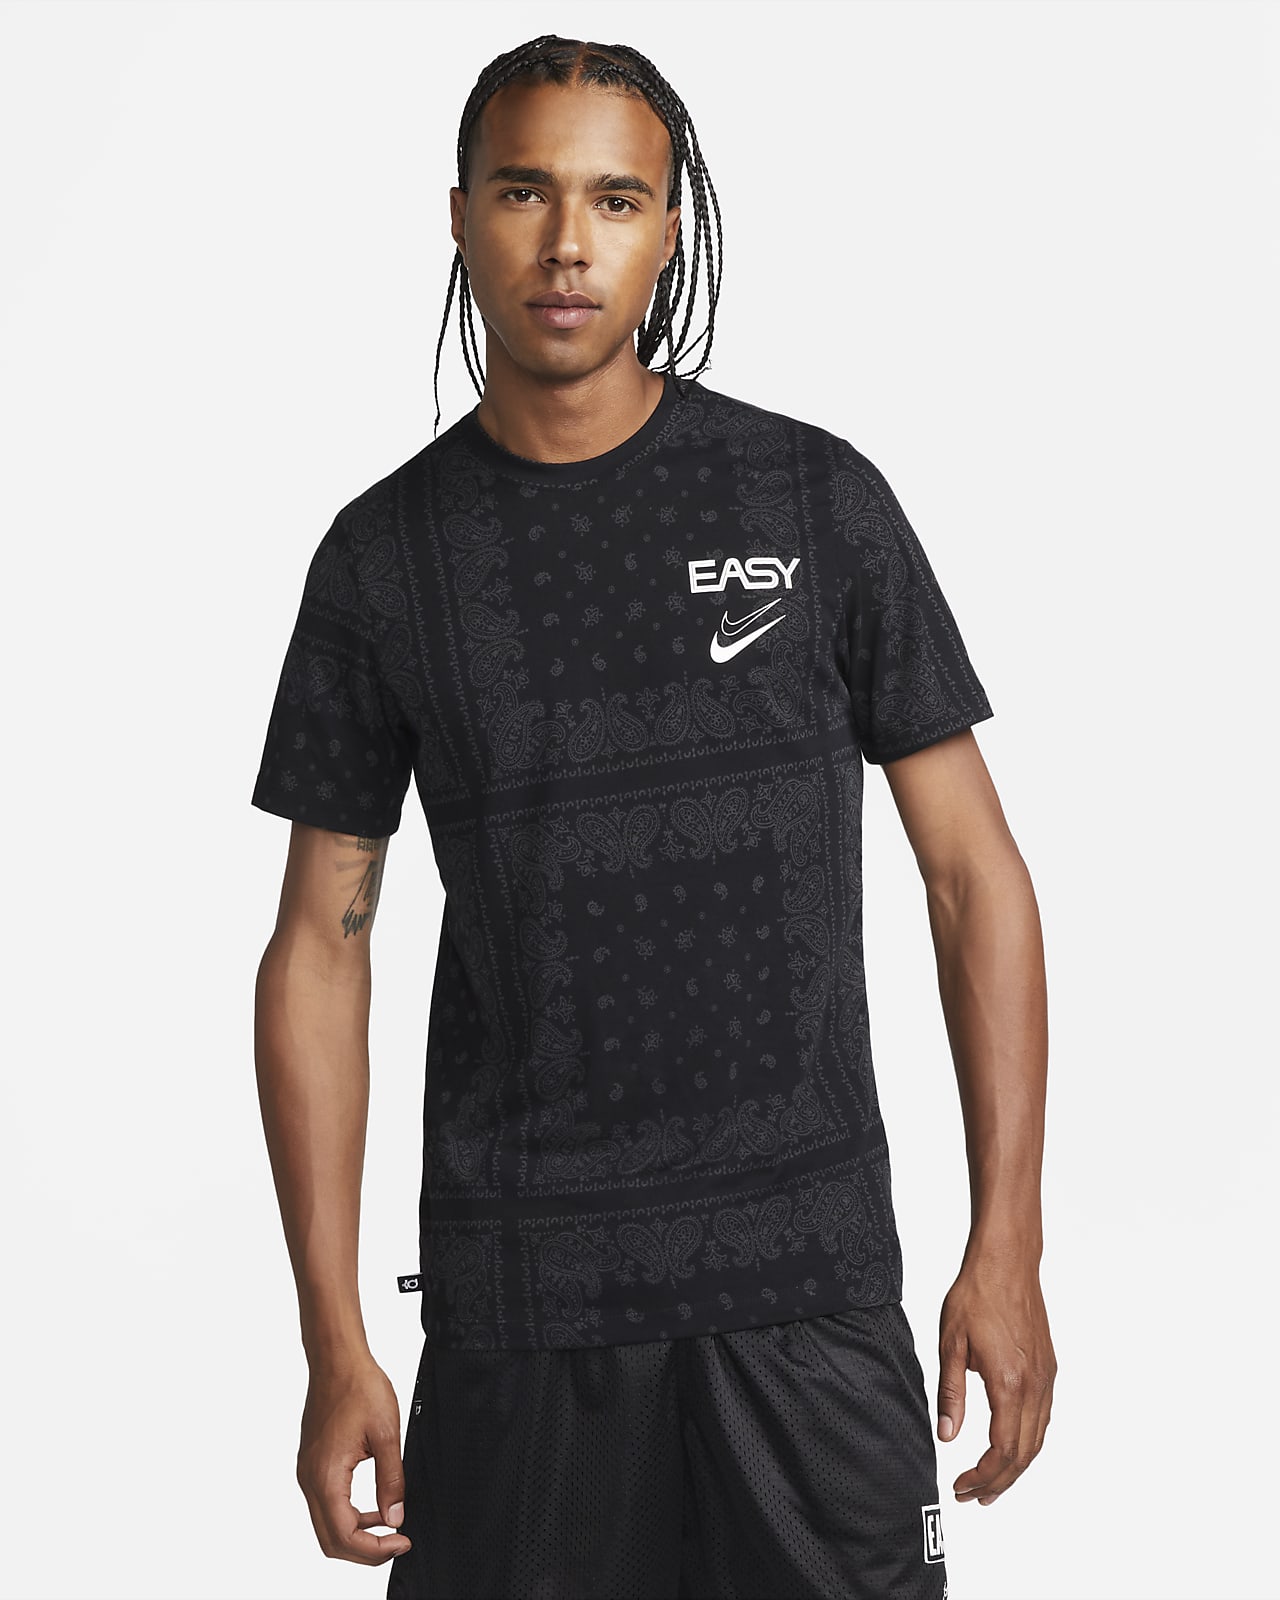 KD Nike Dri-FIT Men's Basketball T-Shirt